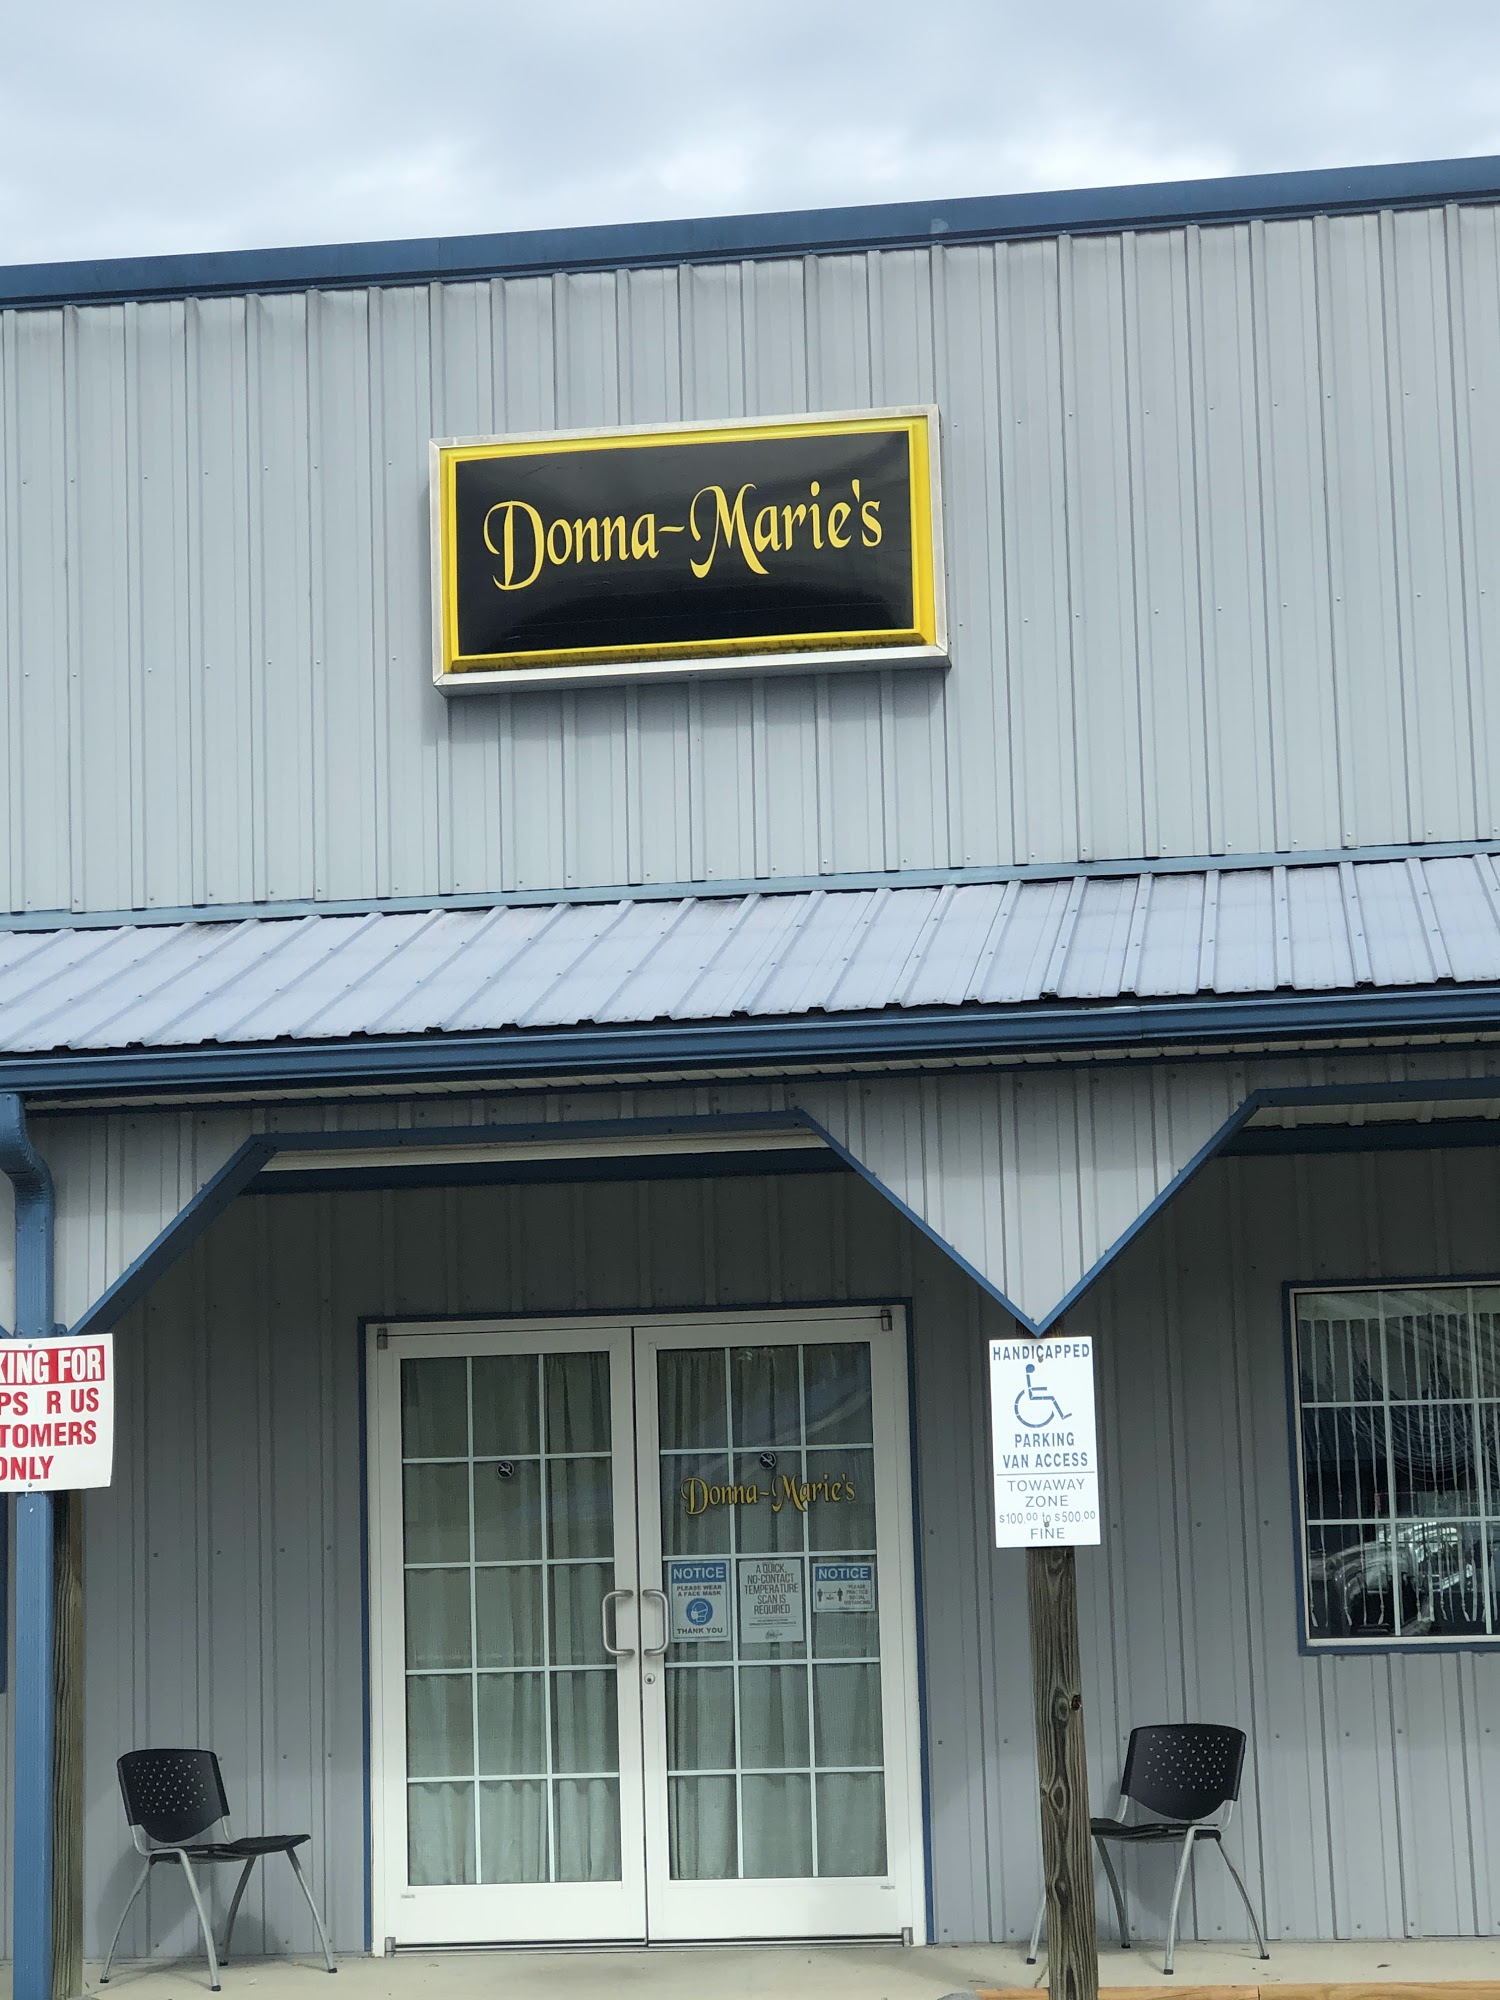 Donna-Marie's 101 U.S. 23 South, 1055 US-23 Suite 3, Weber City Virginia 24290